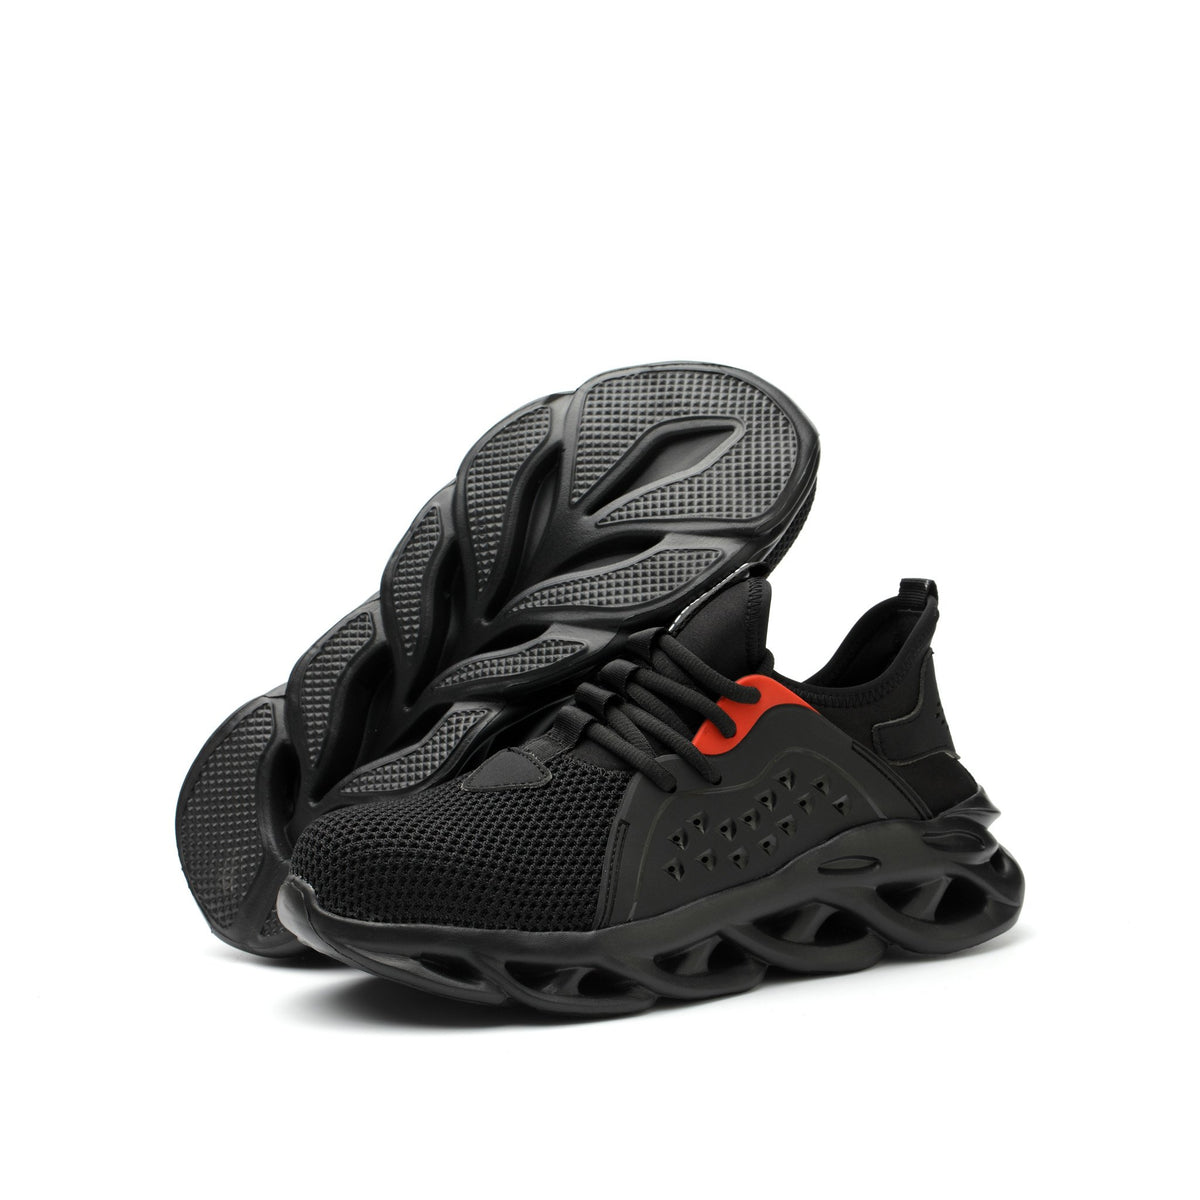 Xciter Mesh Black - Indestructible Shoes